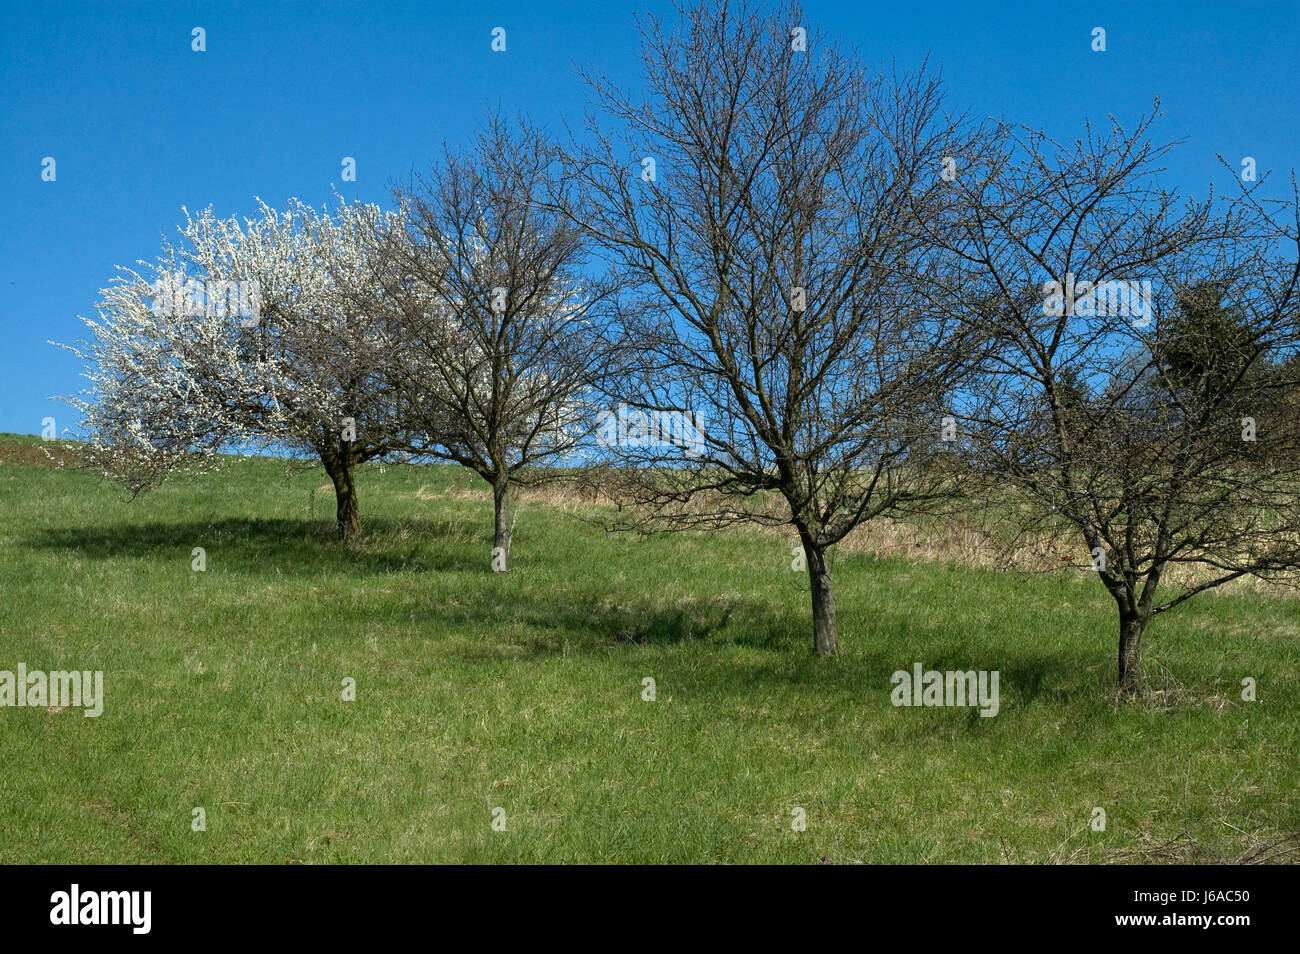 blue tree bloom blossom flourish flourishing blank european caucasian Stock Photo